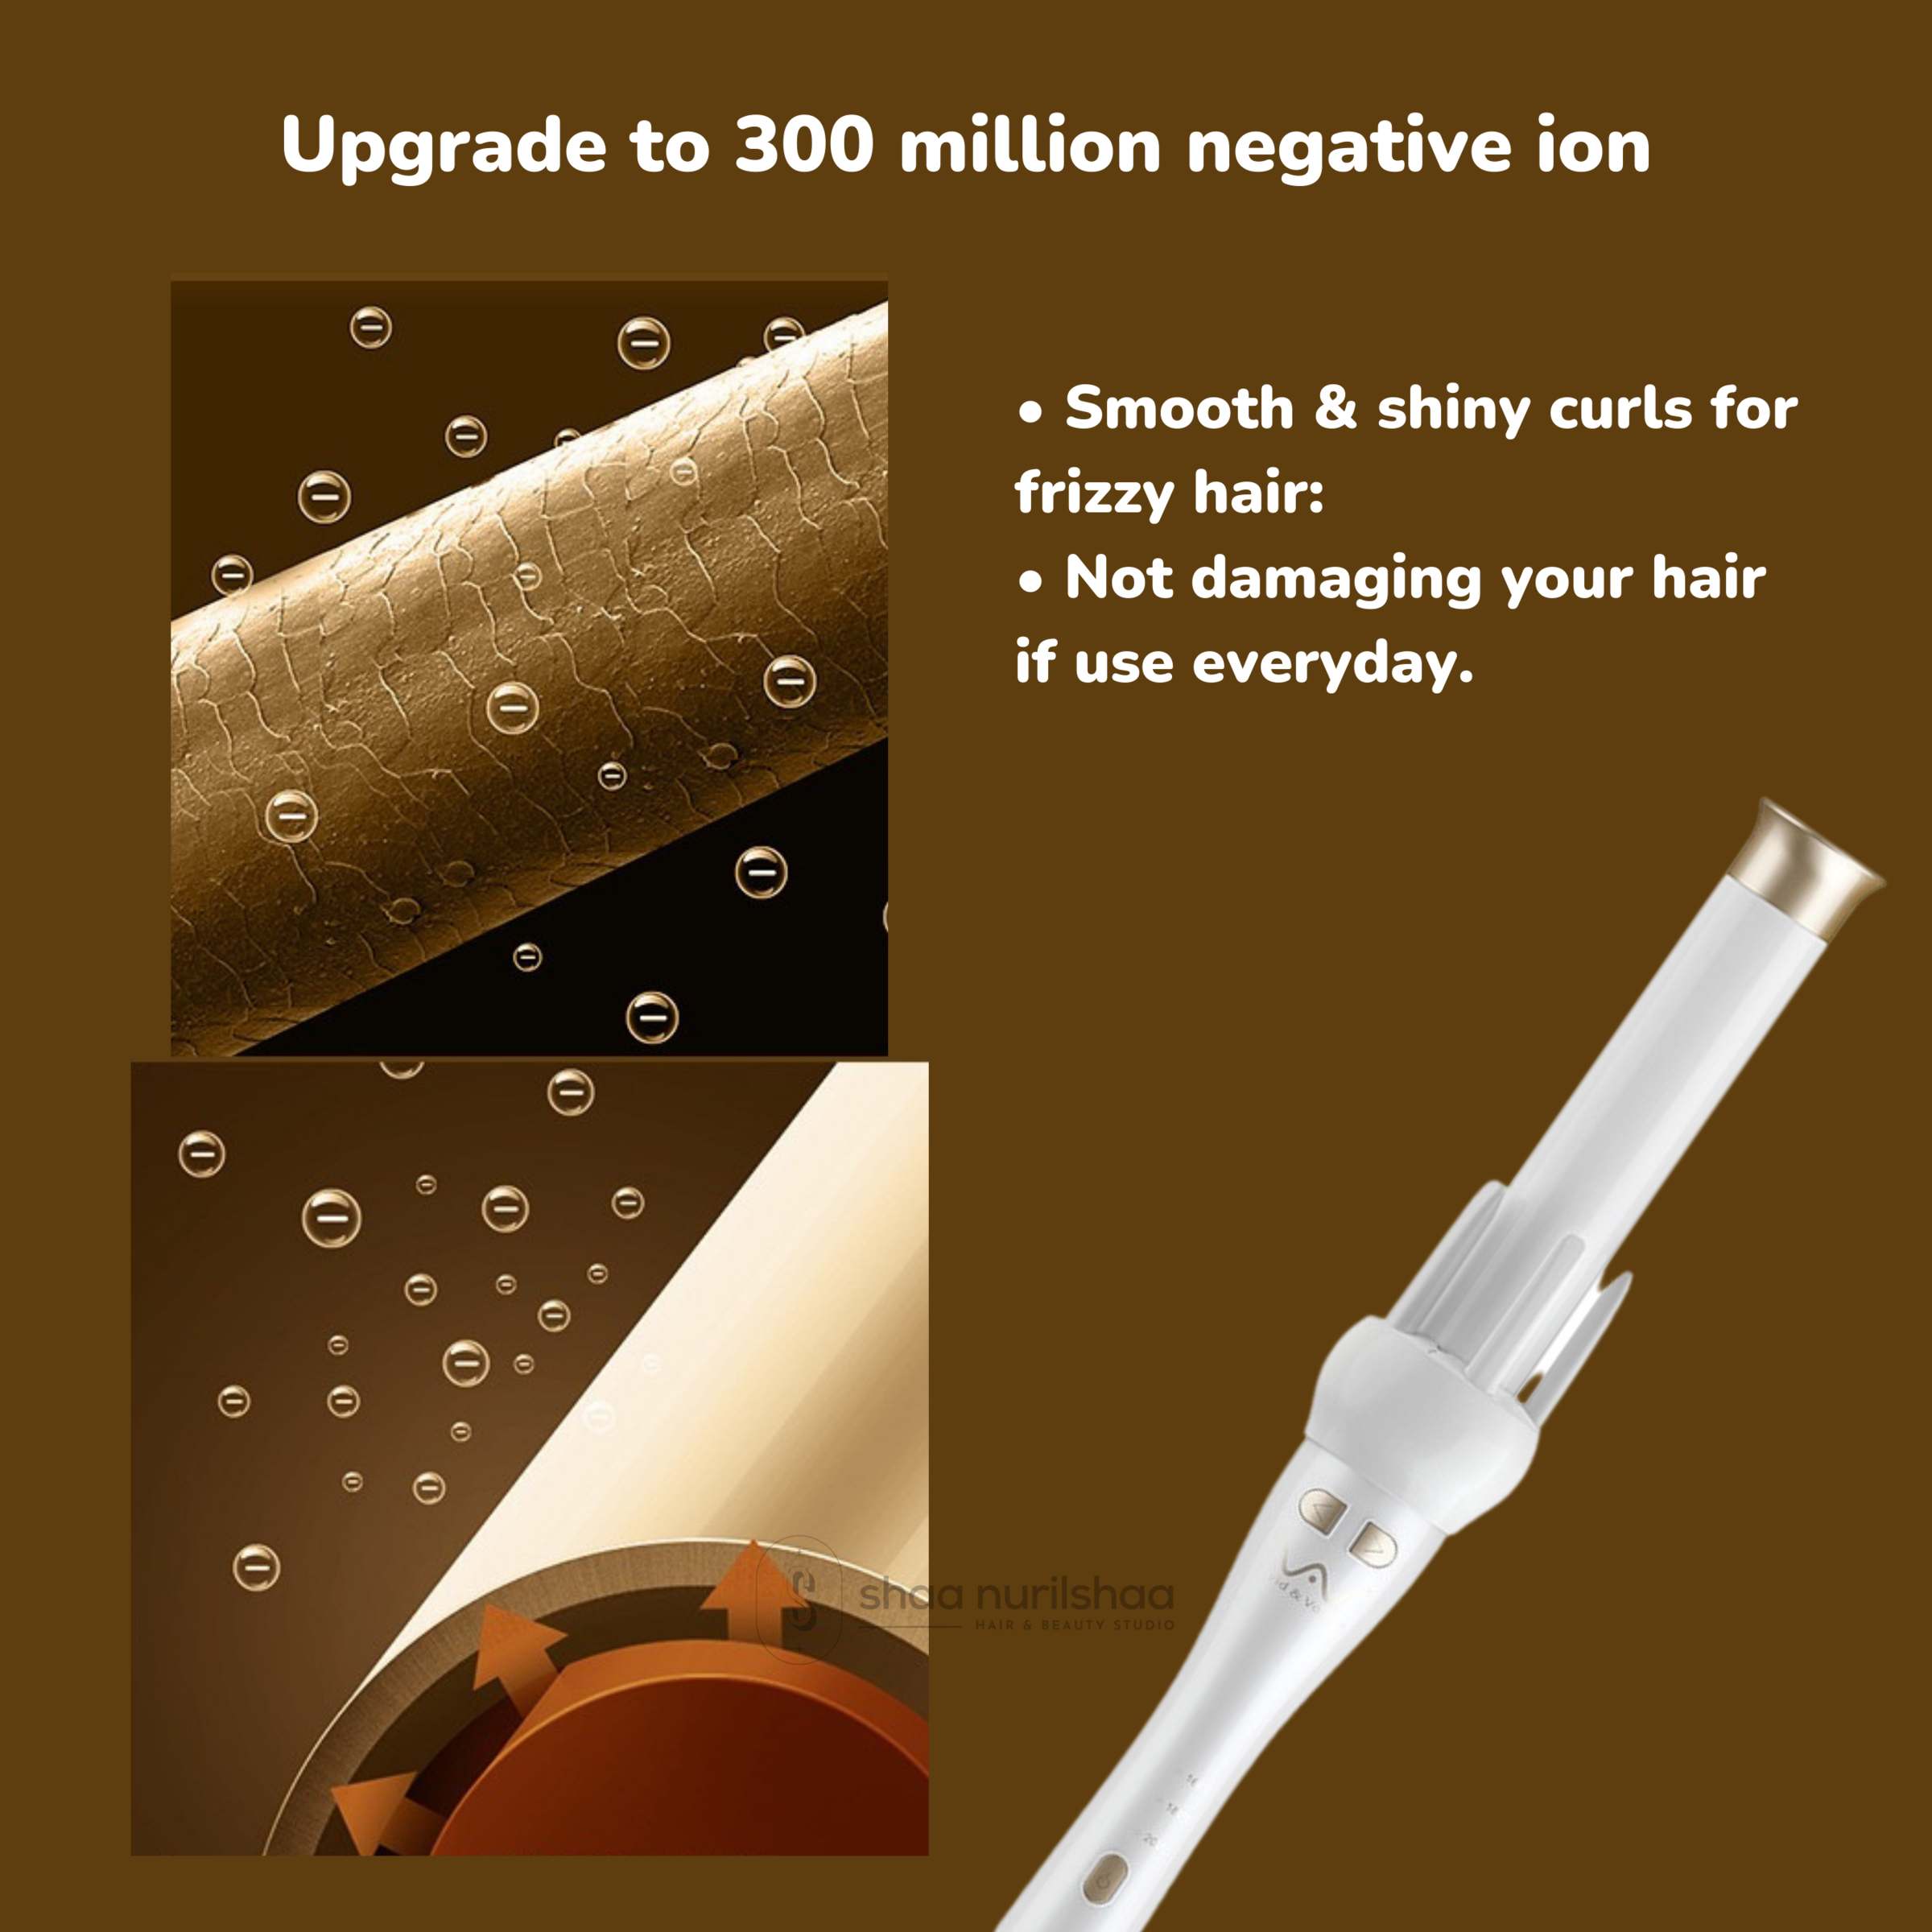 Upgrade to 300 million negative ion - 2